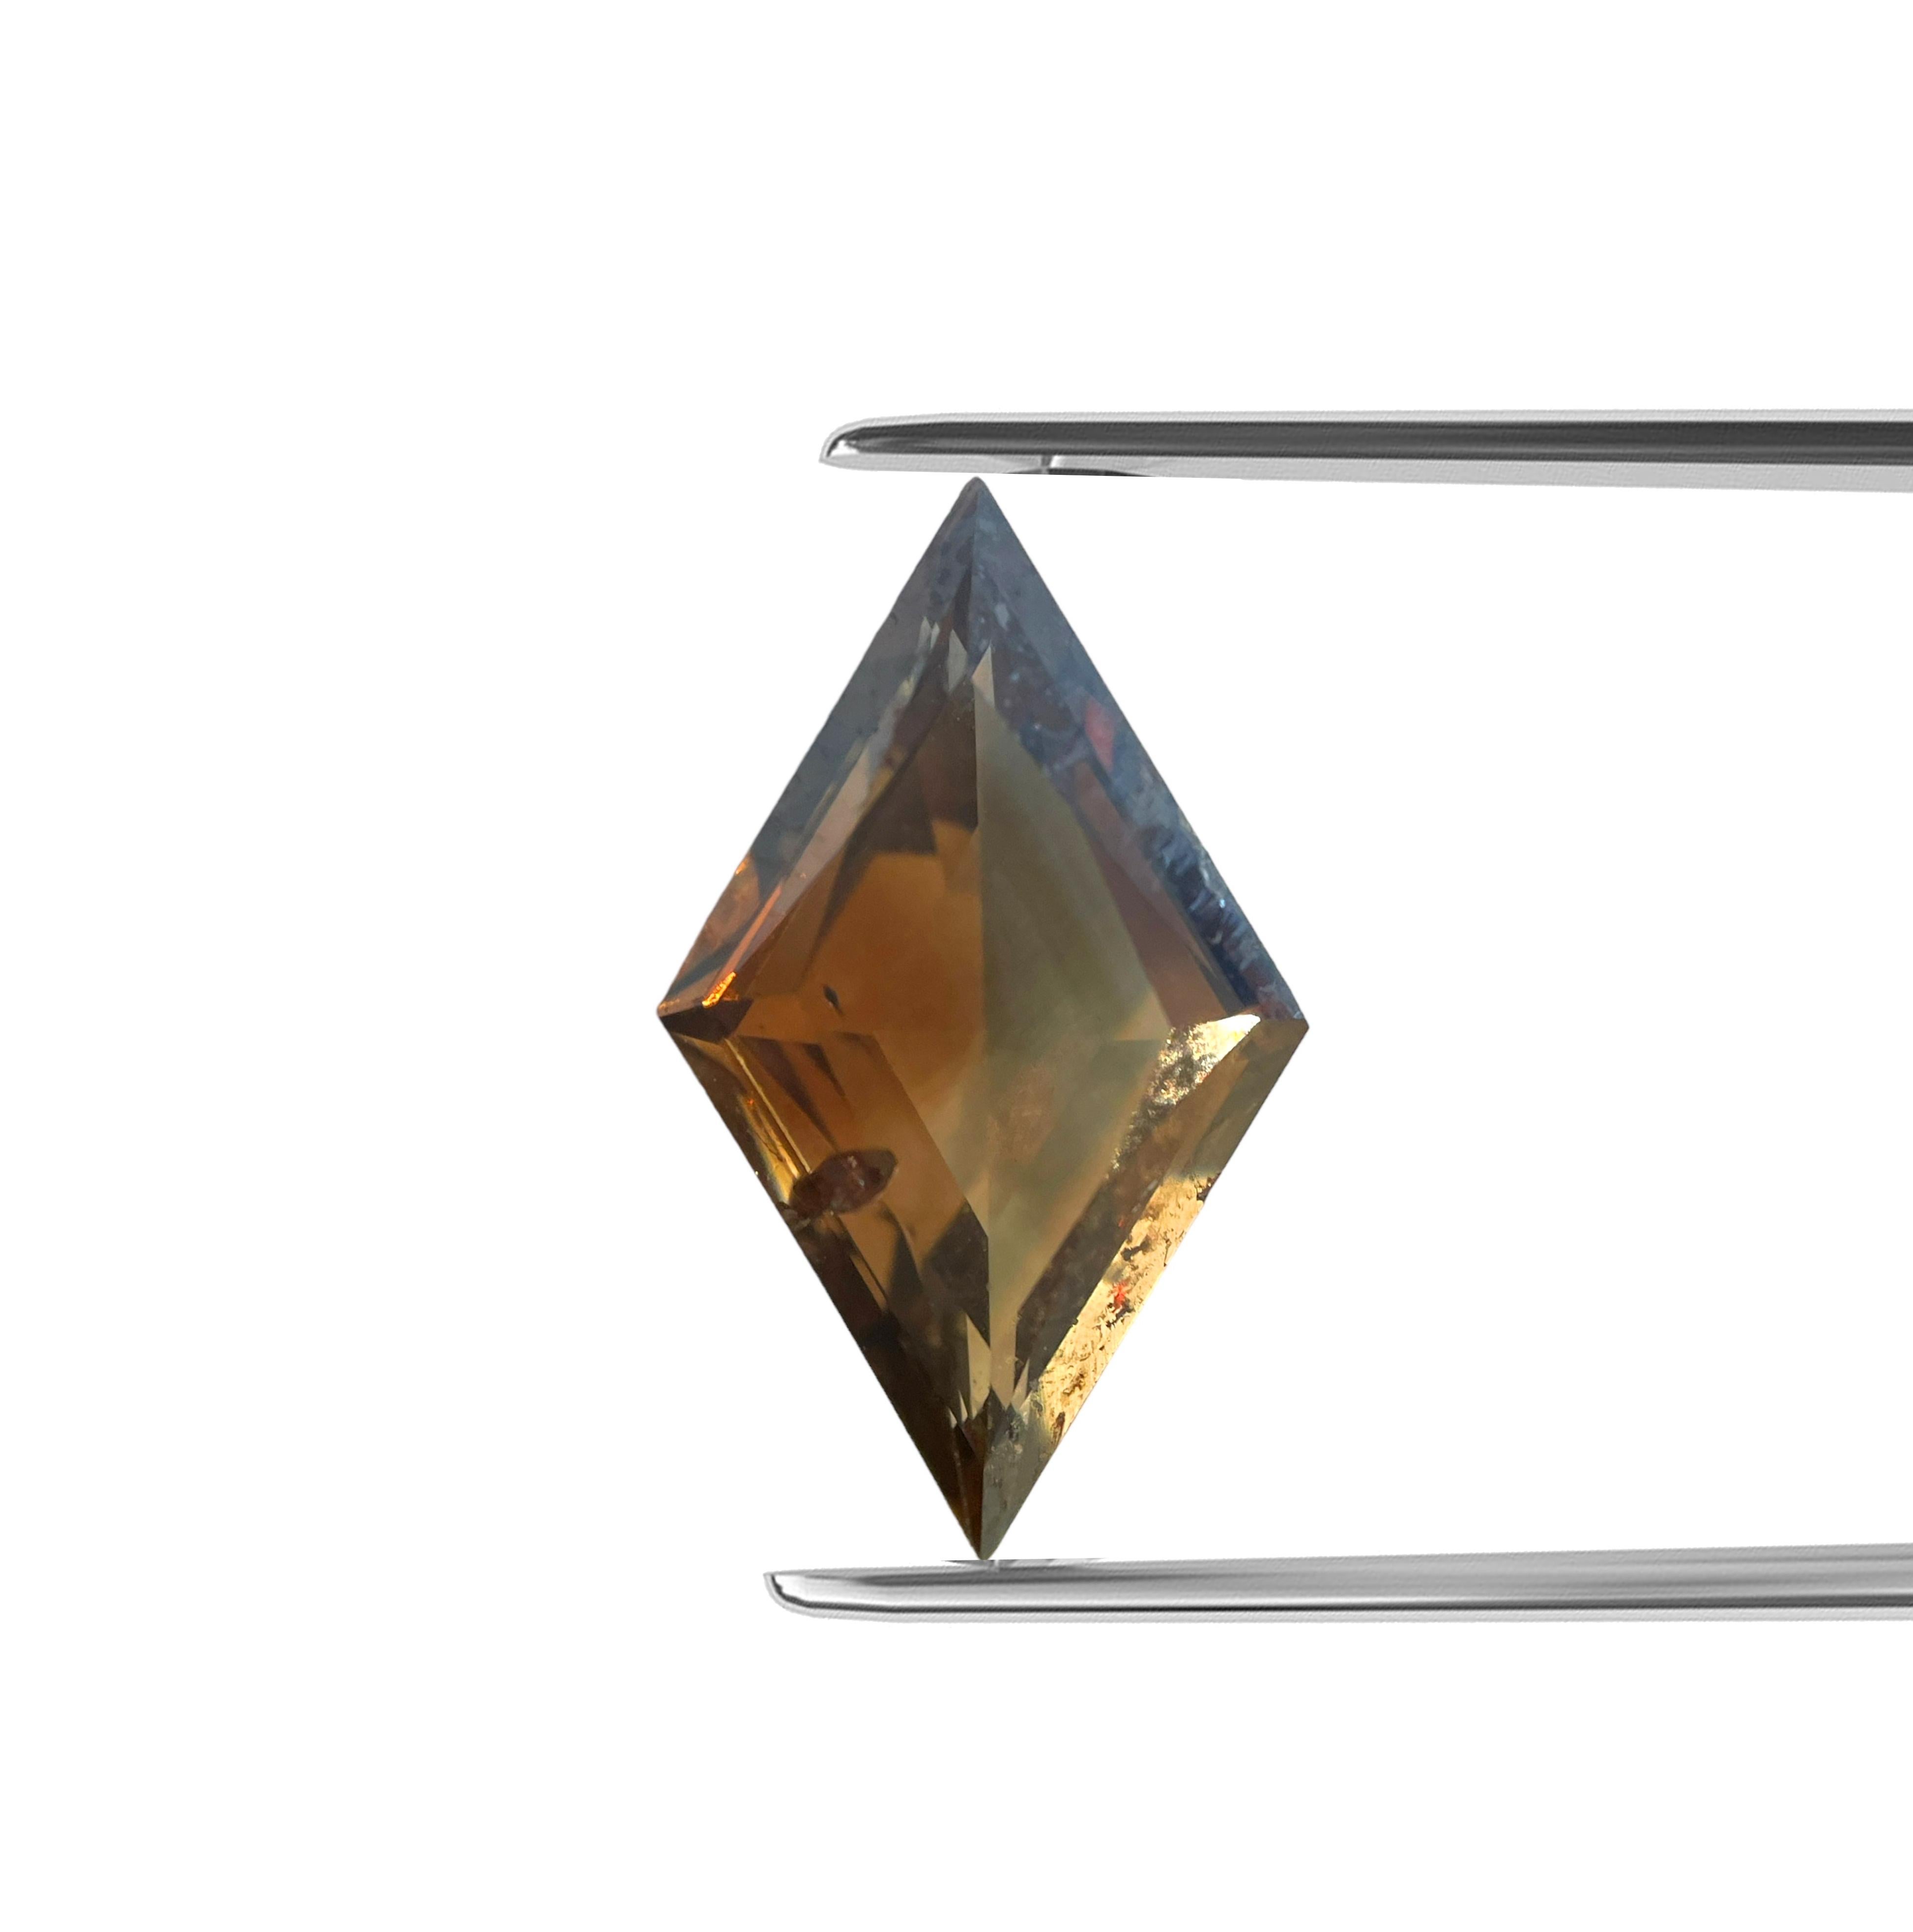 ITEM DESCRIPTION

ID #:	NYC56119
Stone Shape:bLOZENGE MIXED CUT
Diamond Weight: 2.10ct
Clarity: I1
Color: Fancy Dark Orangey Brown
Cut:	Excellent
Measurements: 14.28 x 8.71 x 3.18 mm
Depth %:	36.6%
Table %:	57%
Symmetry: Good
Polish: